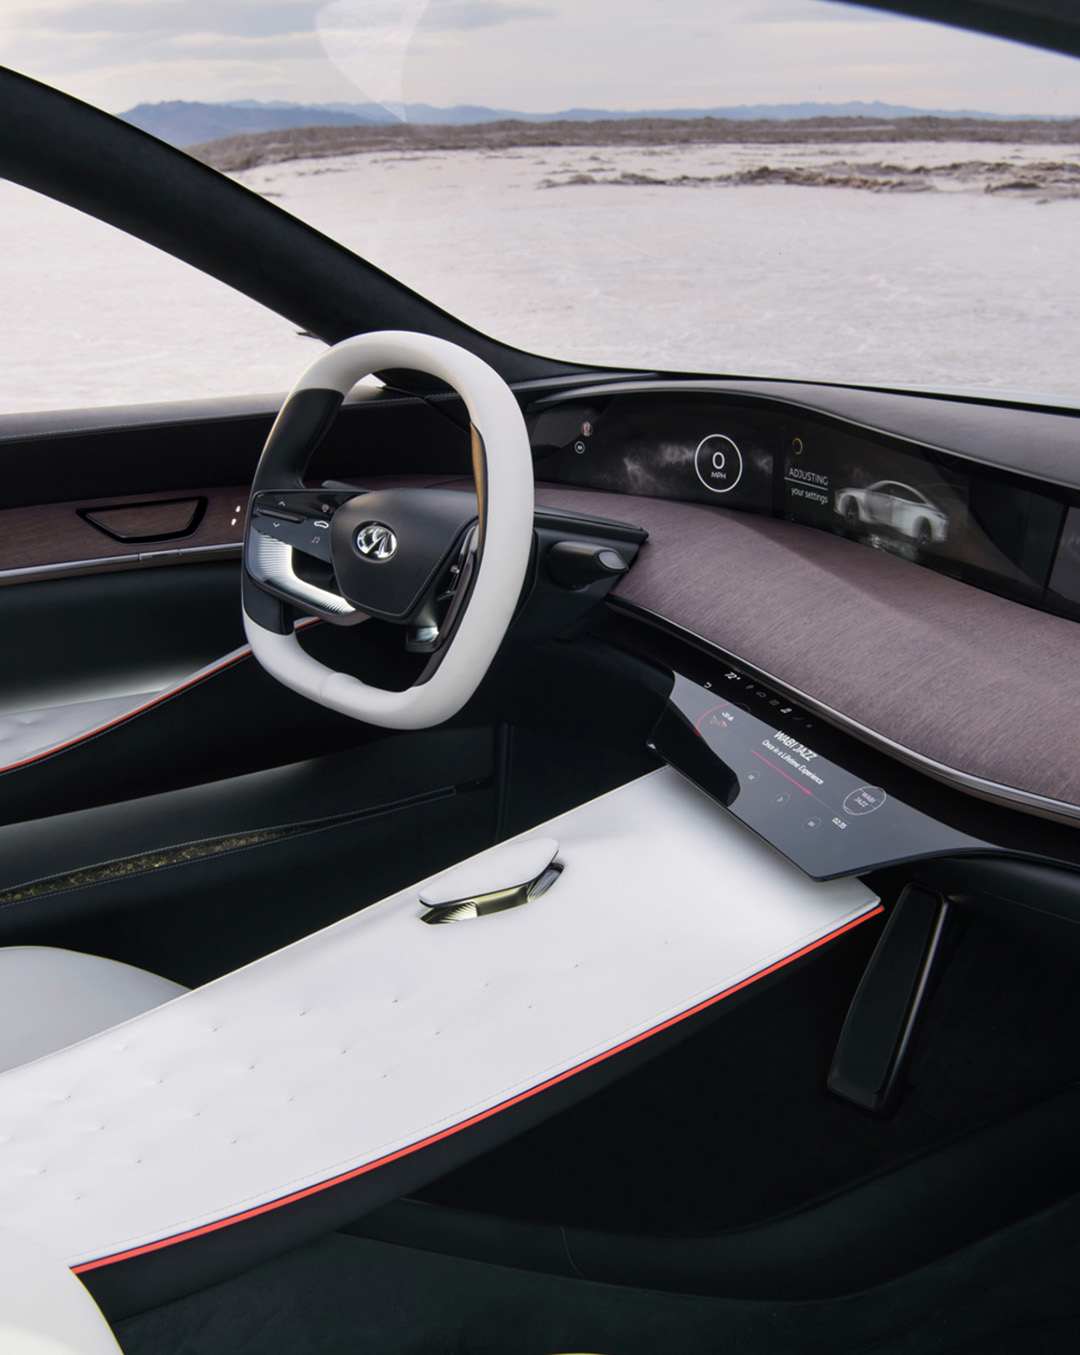 Future INFINITI concept vehicle with white interior